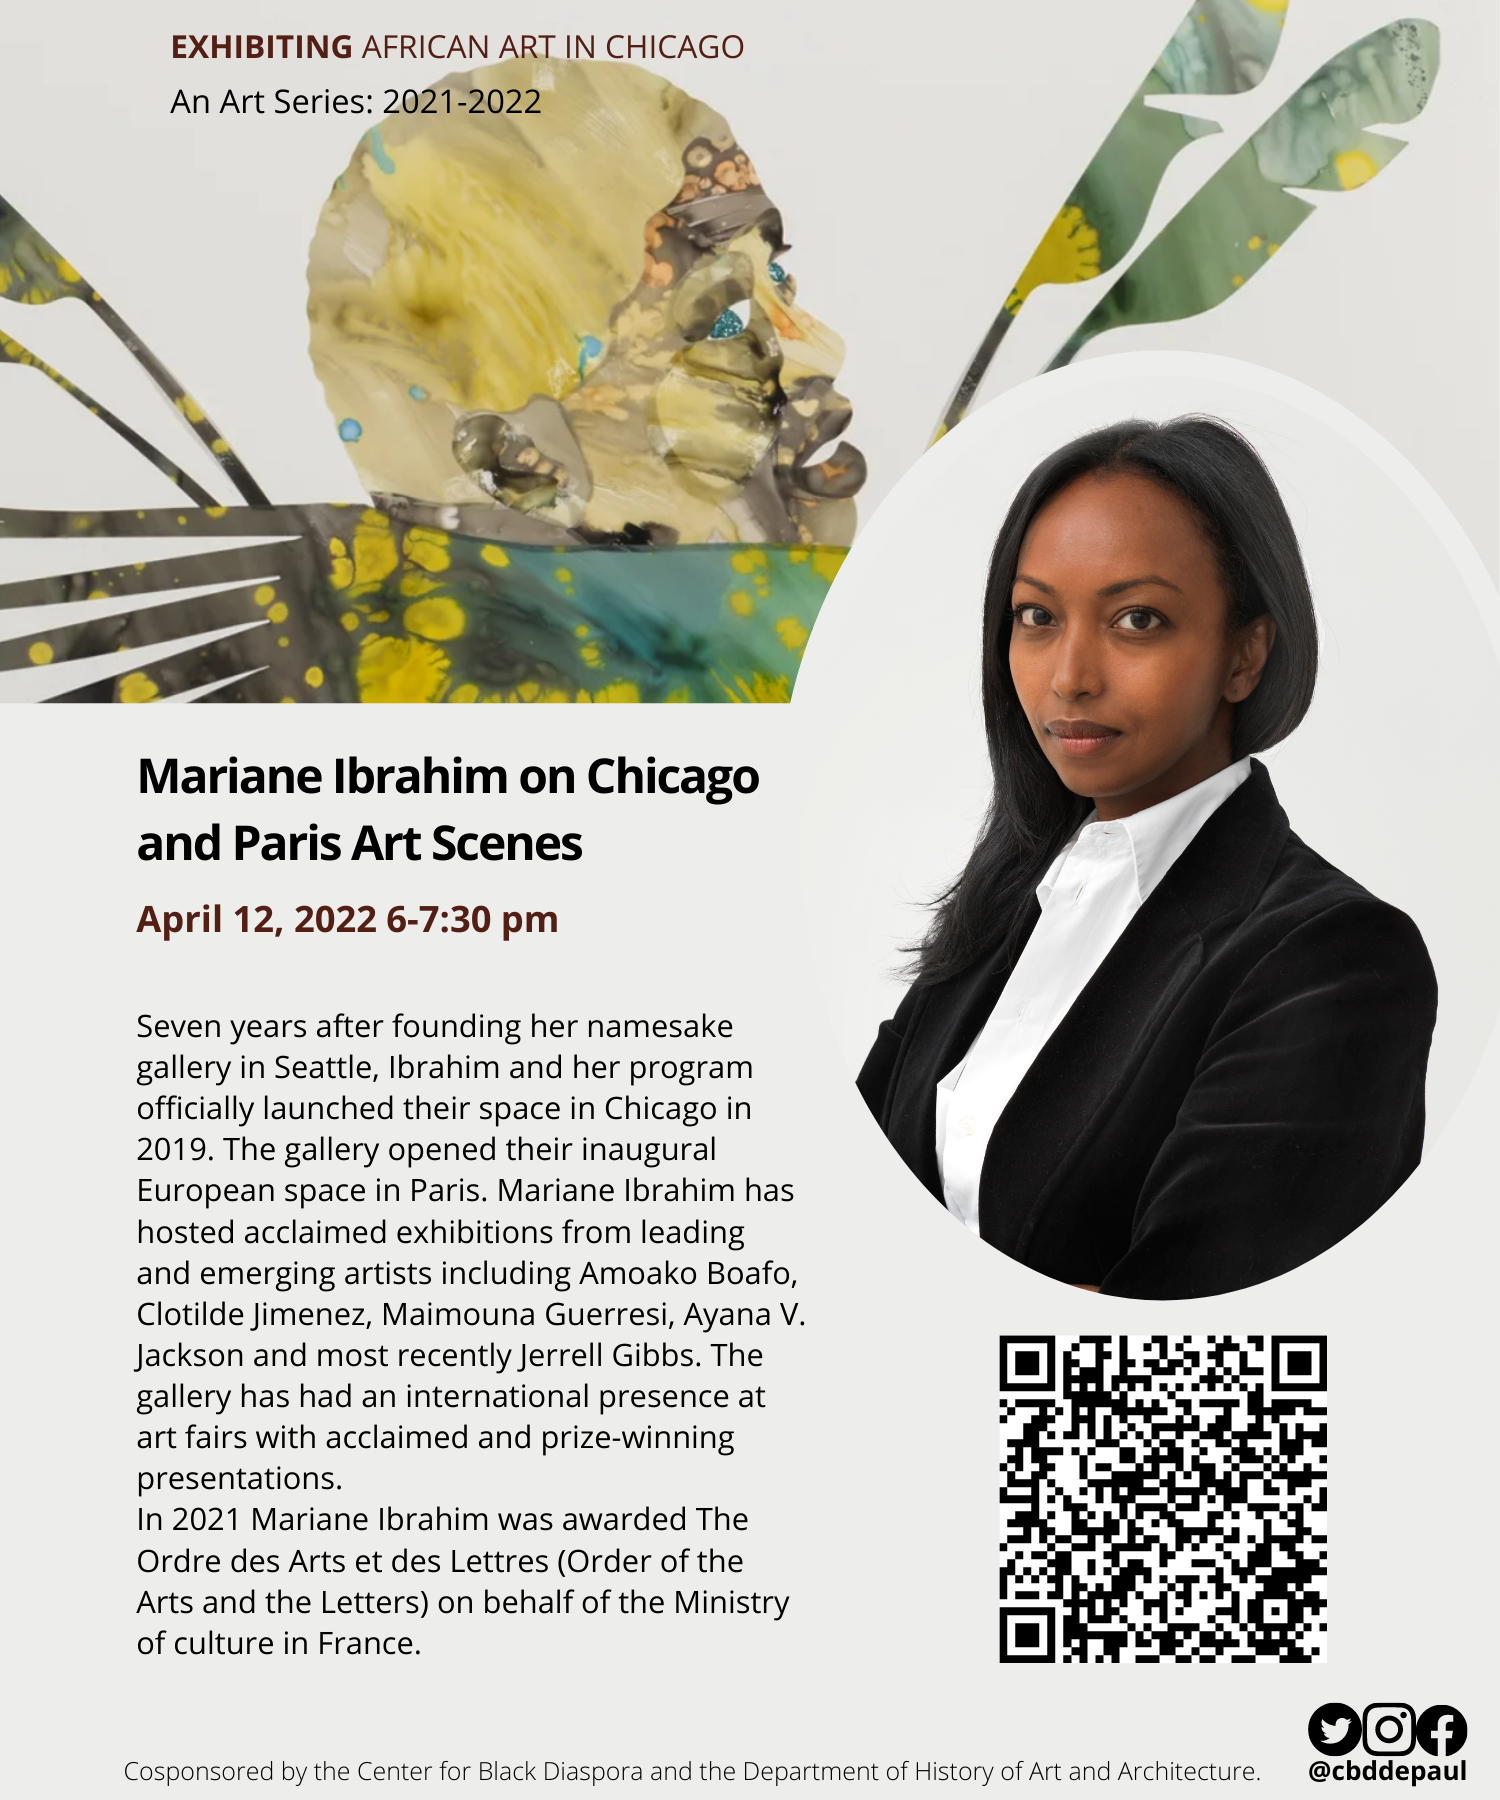 Mariane Ibrahim on Chicago and Paris Art Scenes